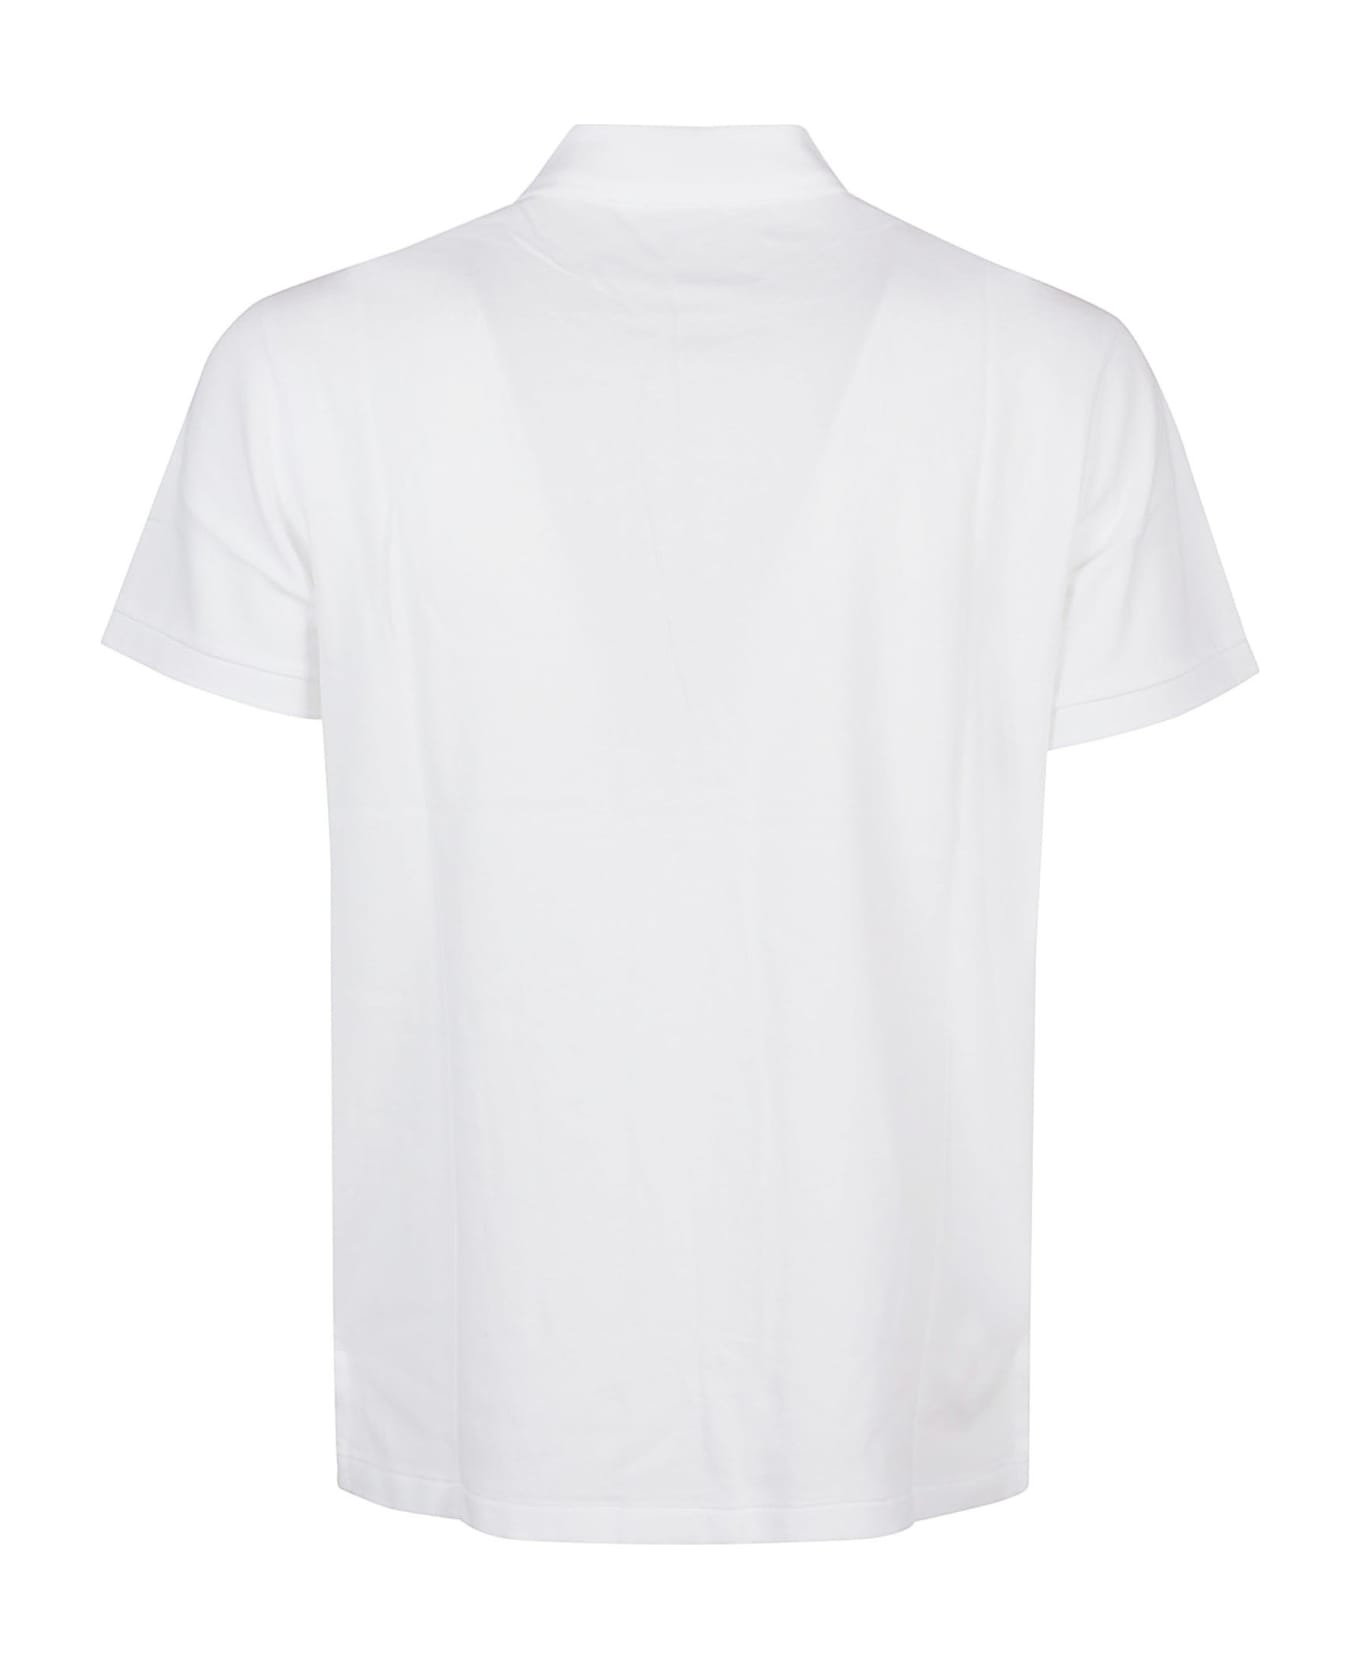 Polo Ralph Lauren Short Sleeve Polo Shirt - White